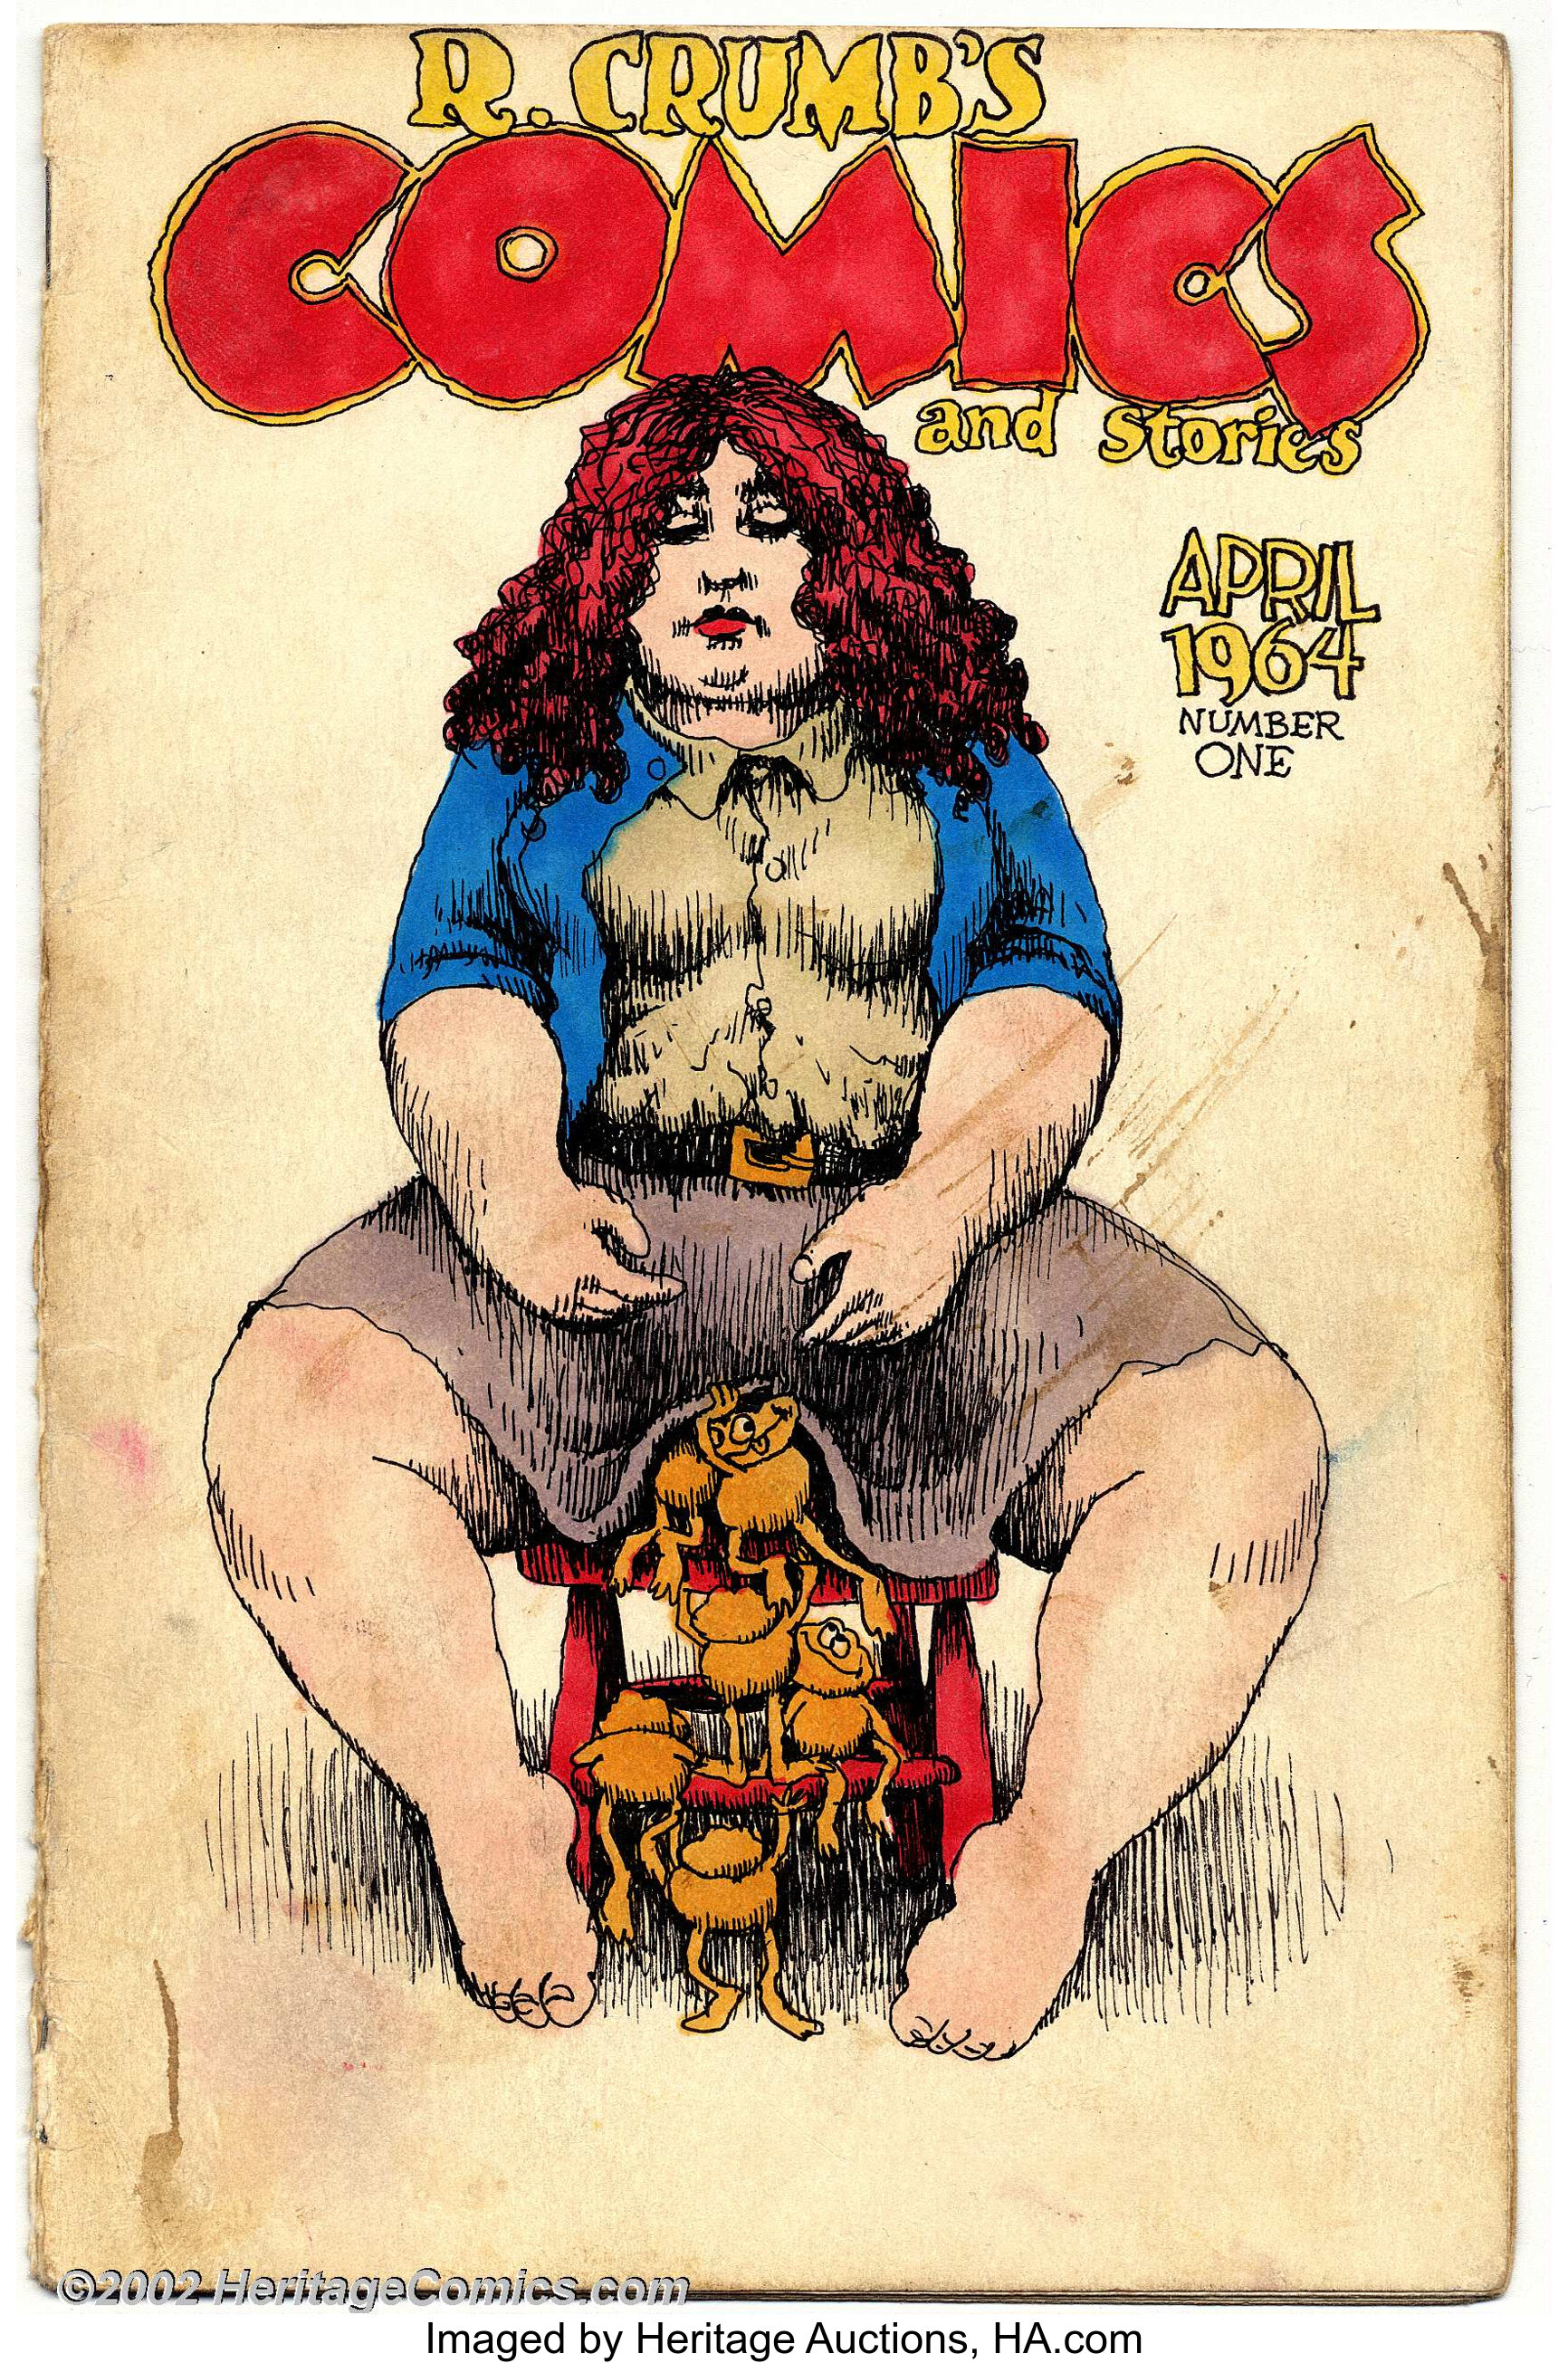 Robert Crumb - Original Art for R. Crumb's Comics and Stories #1, | Lot  #7500 | Heritage Auctions